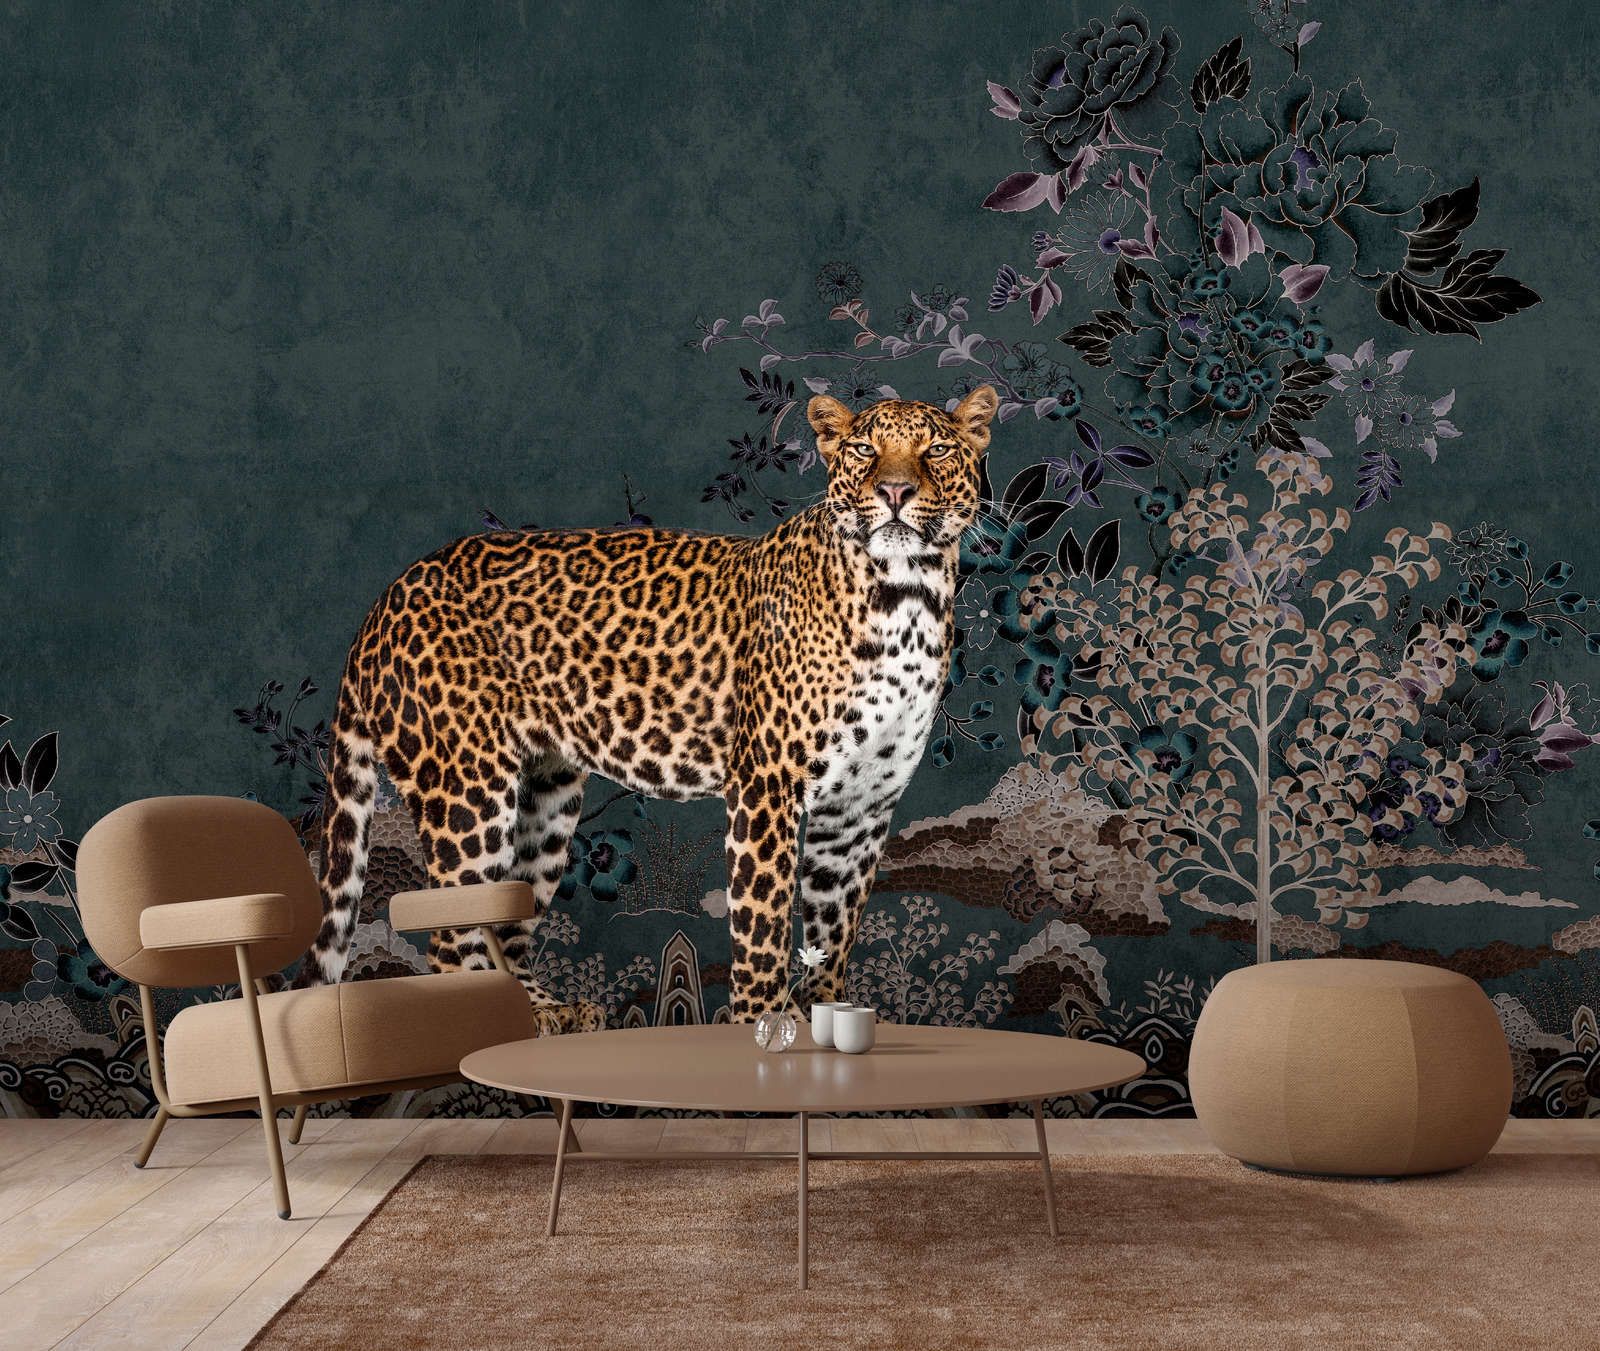             Fotomural »rani« - Motivo abstracto selva con leopardo - Material no tejido de textura ligera
        